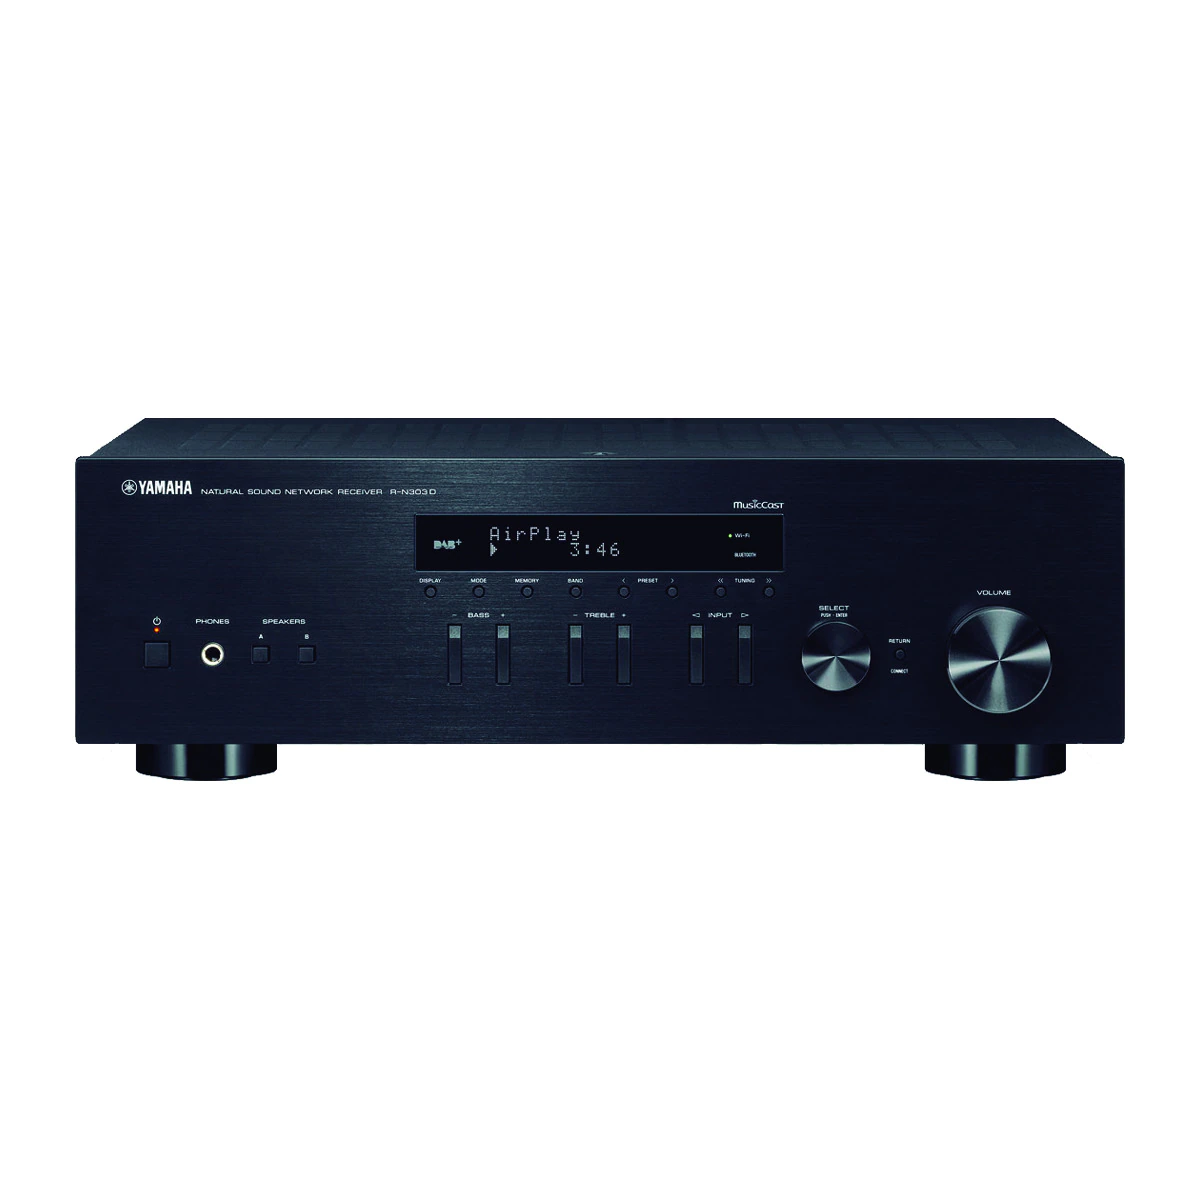 Receptor estéreo en red Yamaha Musiccast R-N303D Negro Hi-Res con Bluetooth